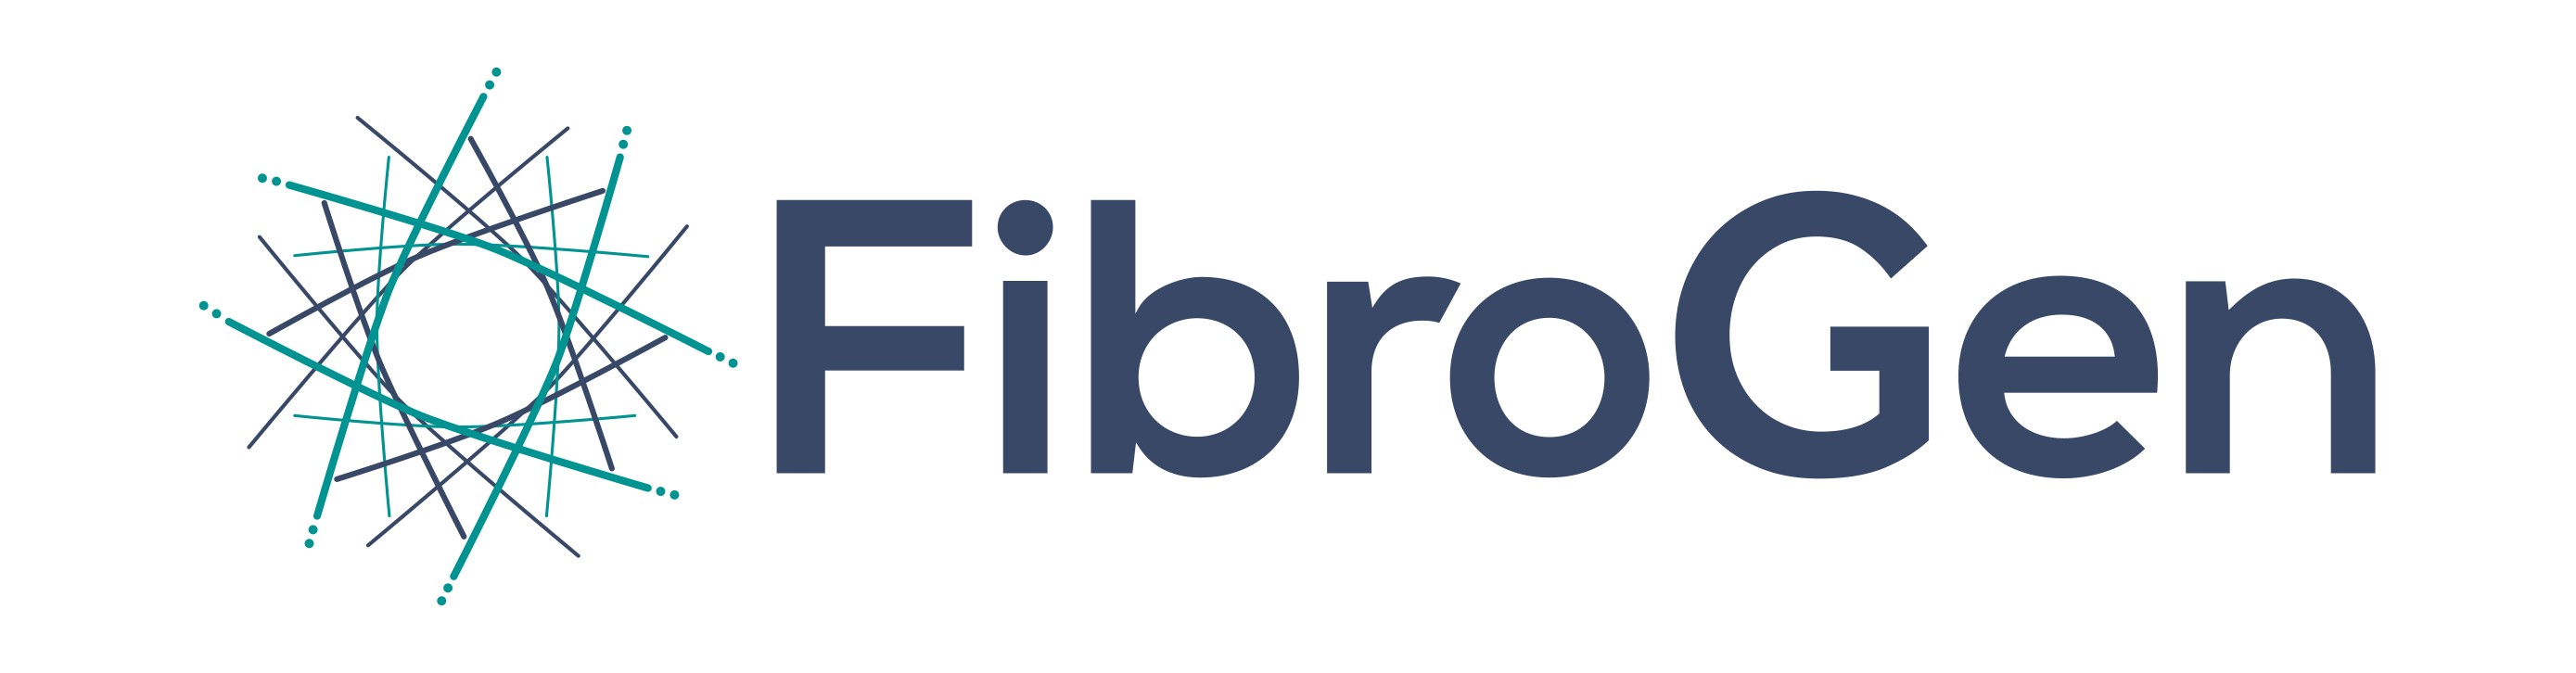 Fibrogen_US_Primary_logo_RGB_M01.jpg